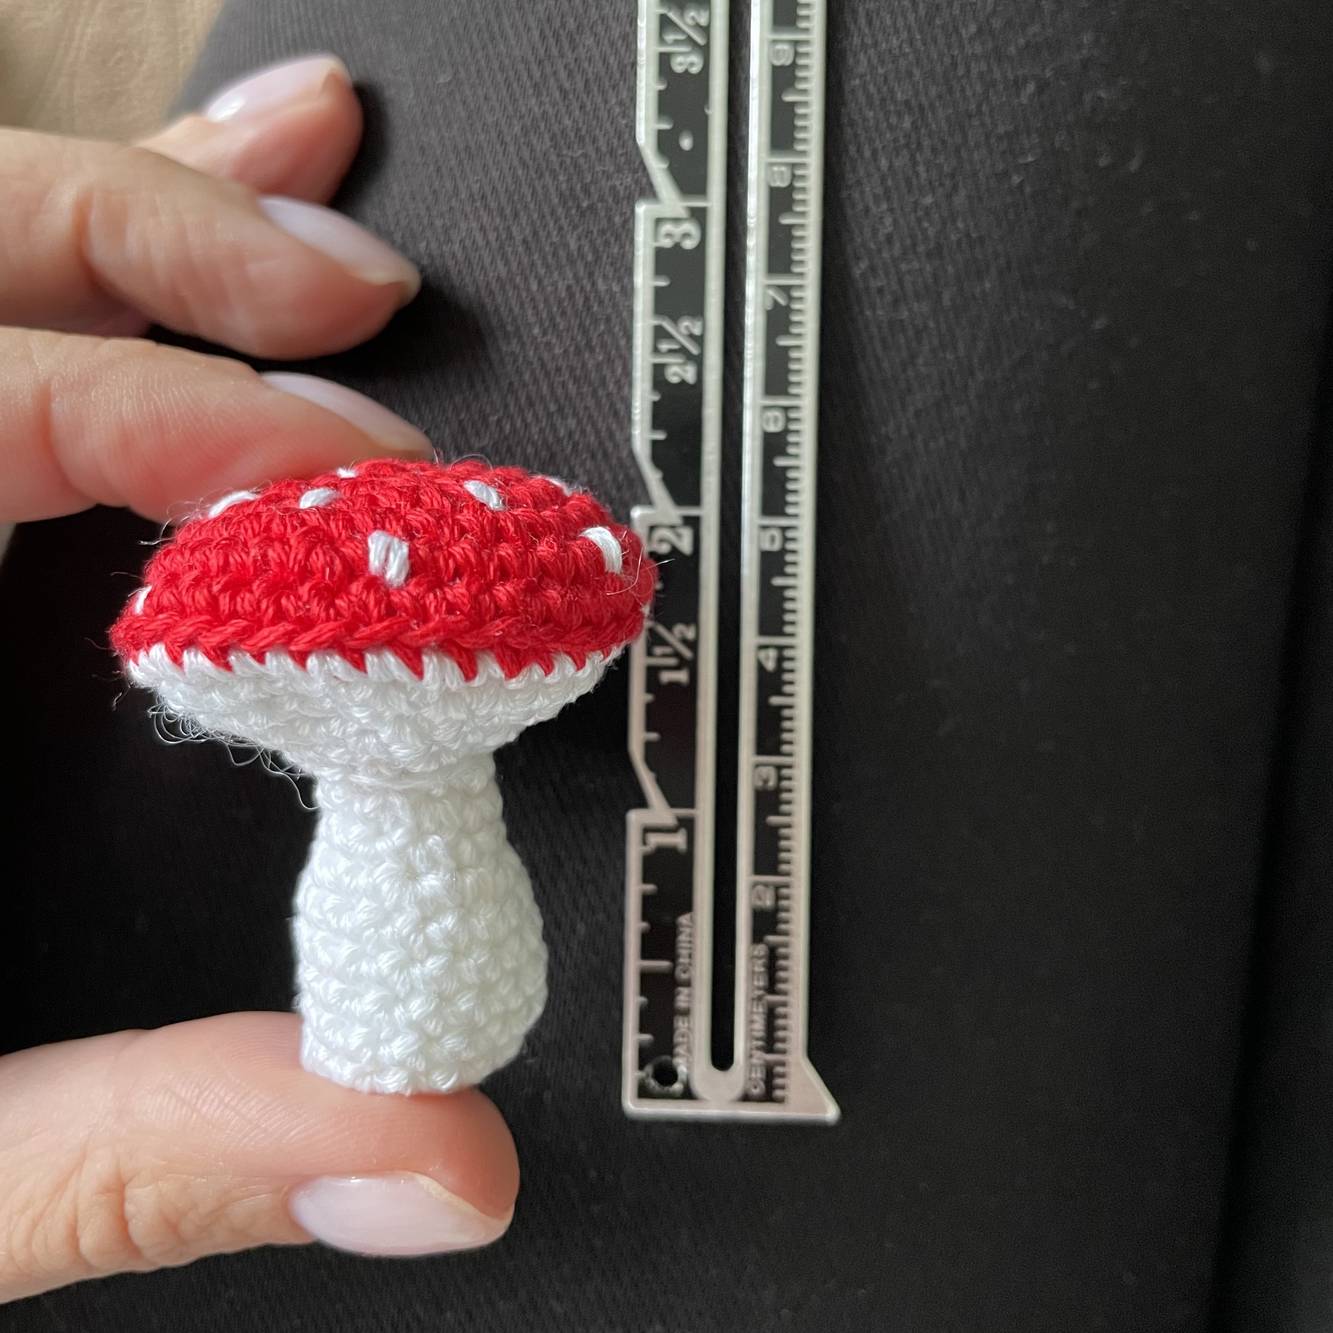 Mushroom keychain amigurumi crochet pattern